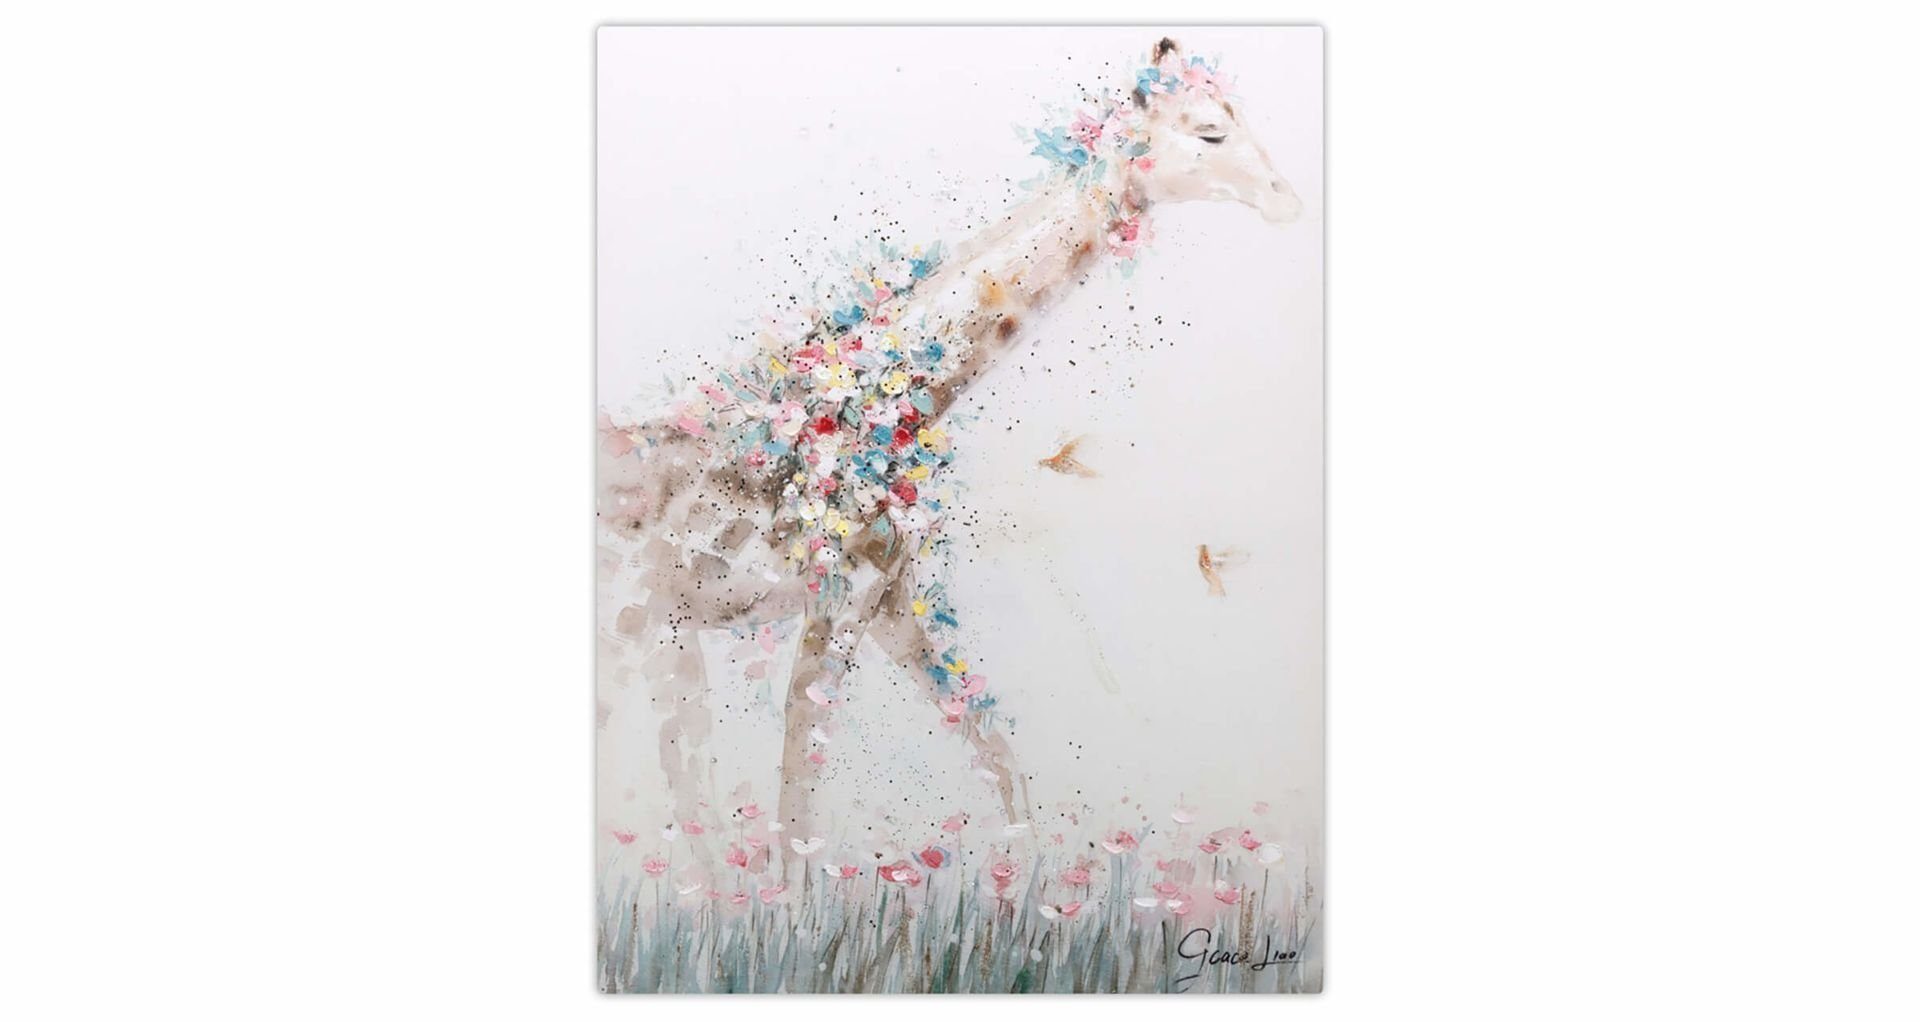 Giraffe 75x100 Wandbild 100% Princess Leinwandbild HANDGEMALT Gemälde KUNSTLOFT Wohnzimmer cm,